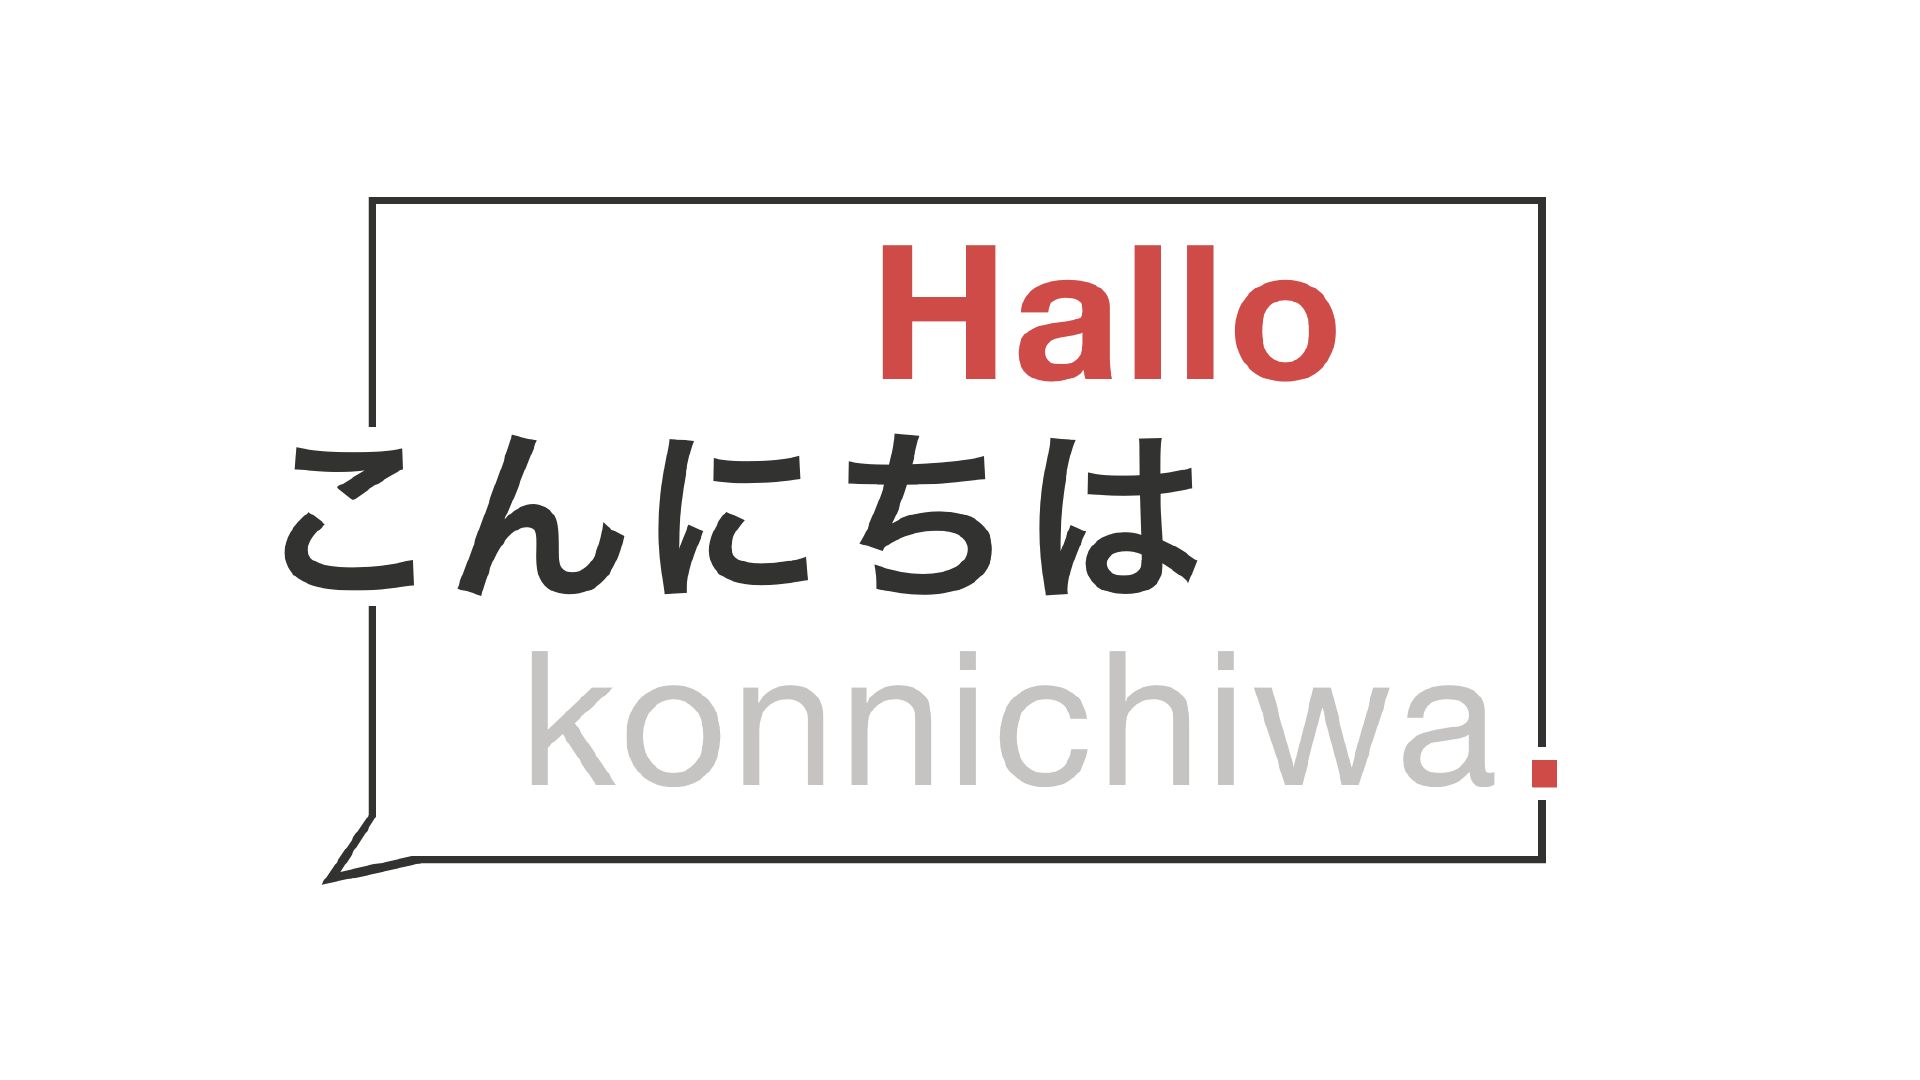 Sprachblase: Hallo, Konnichiwa